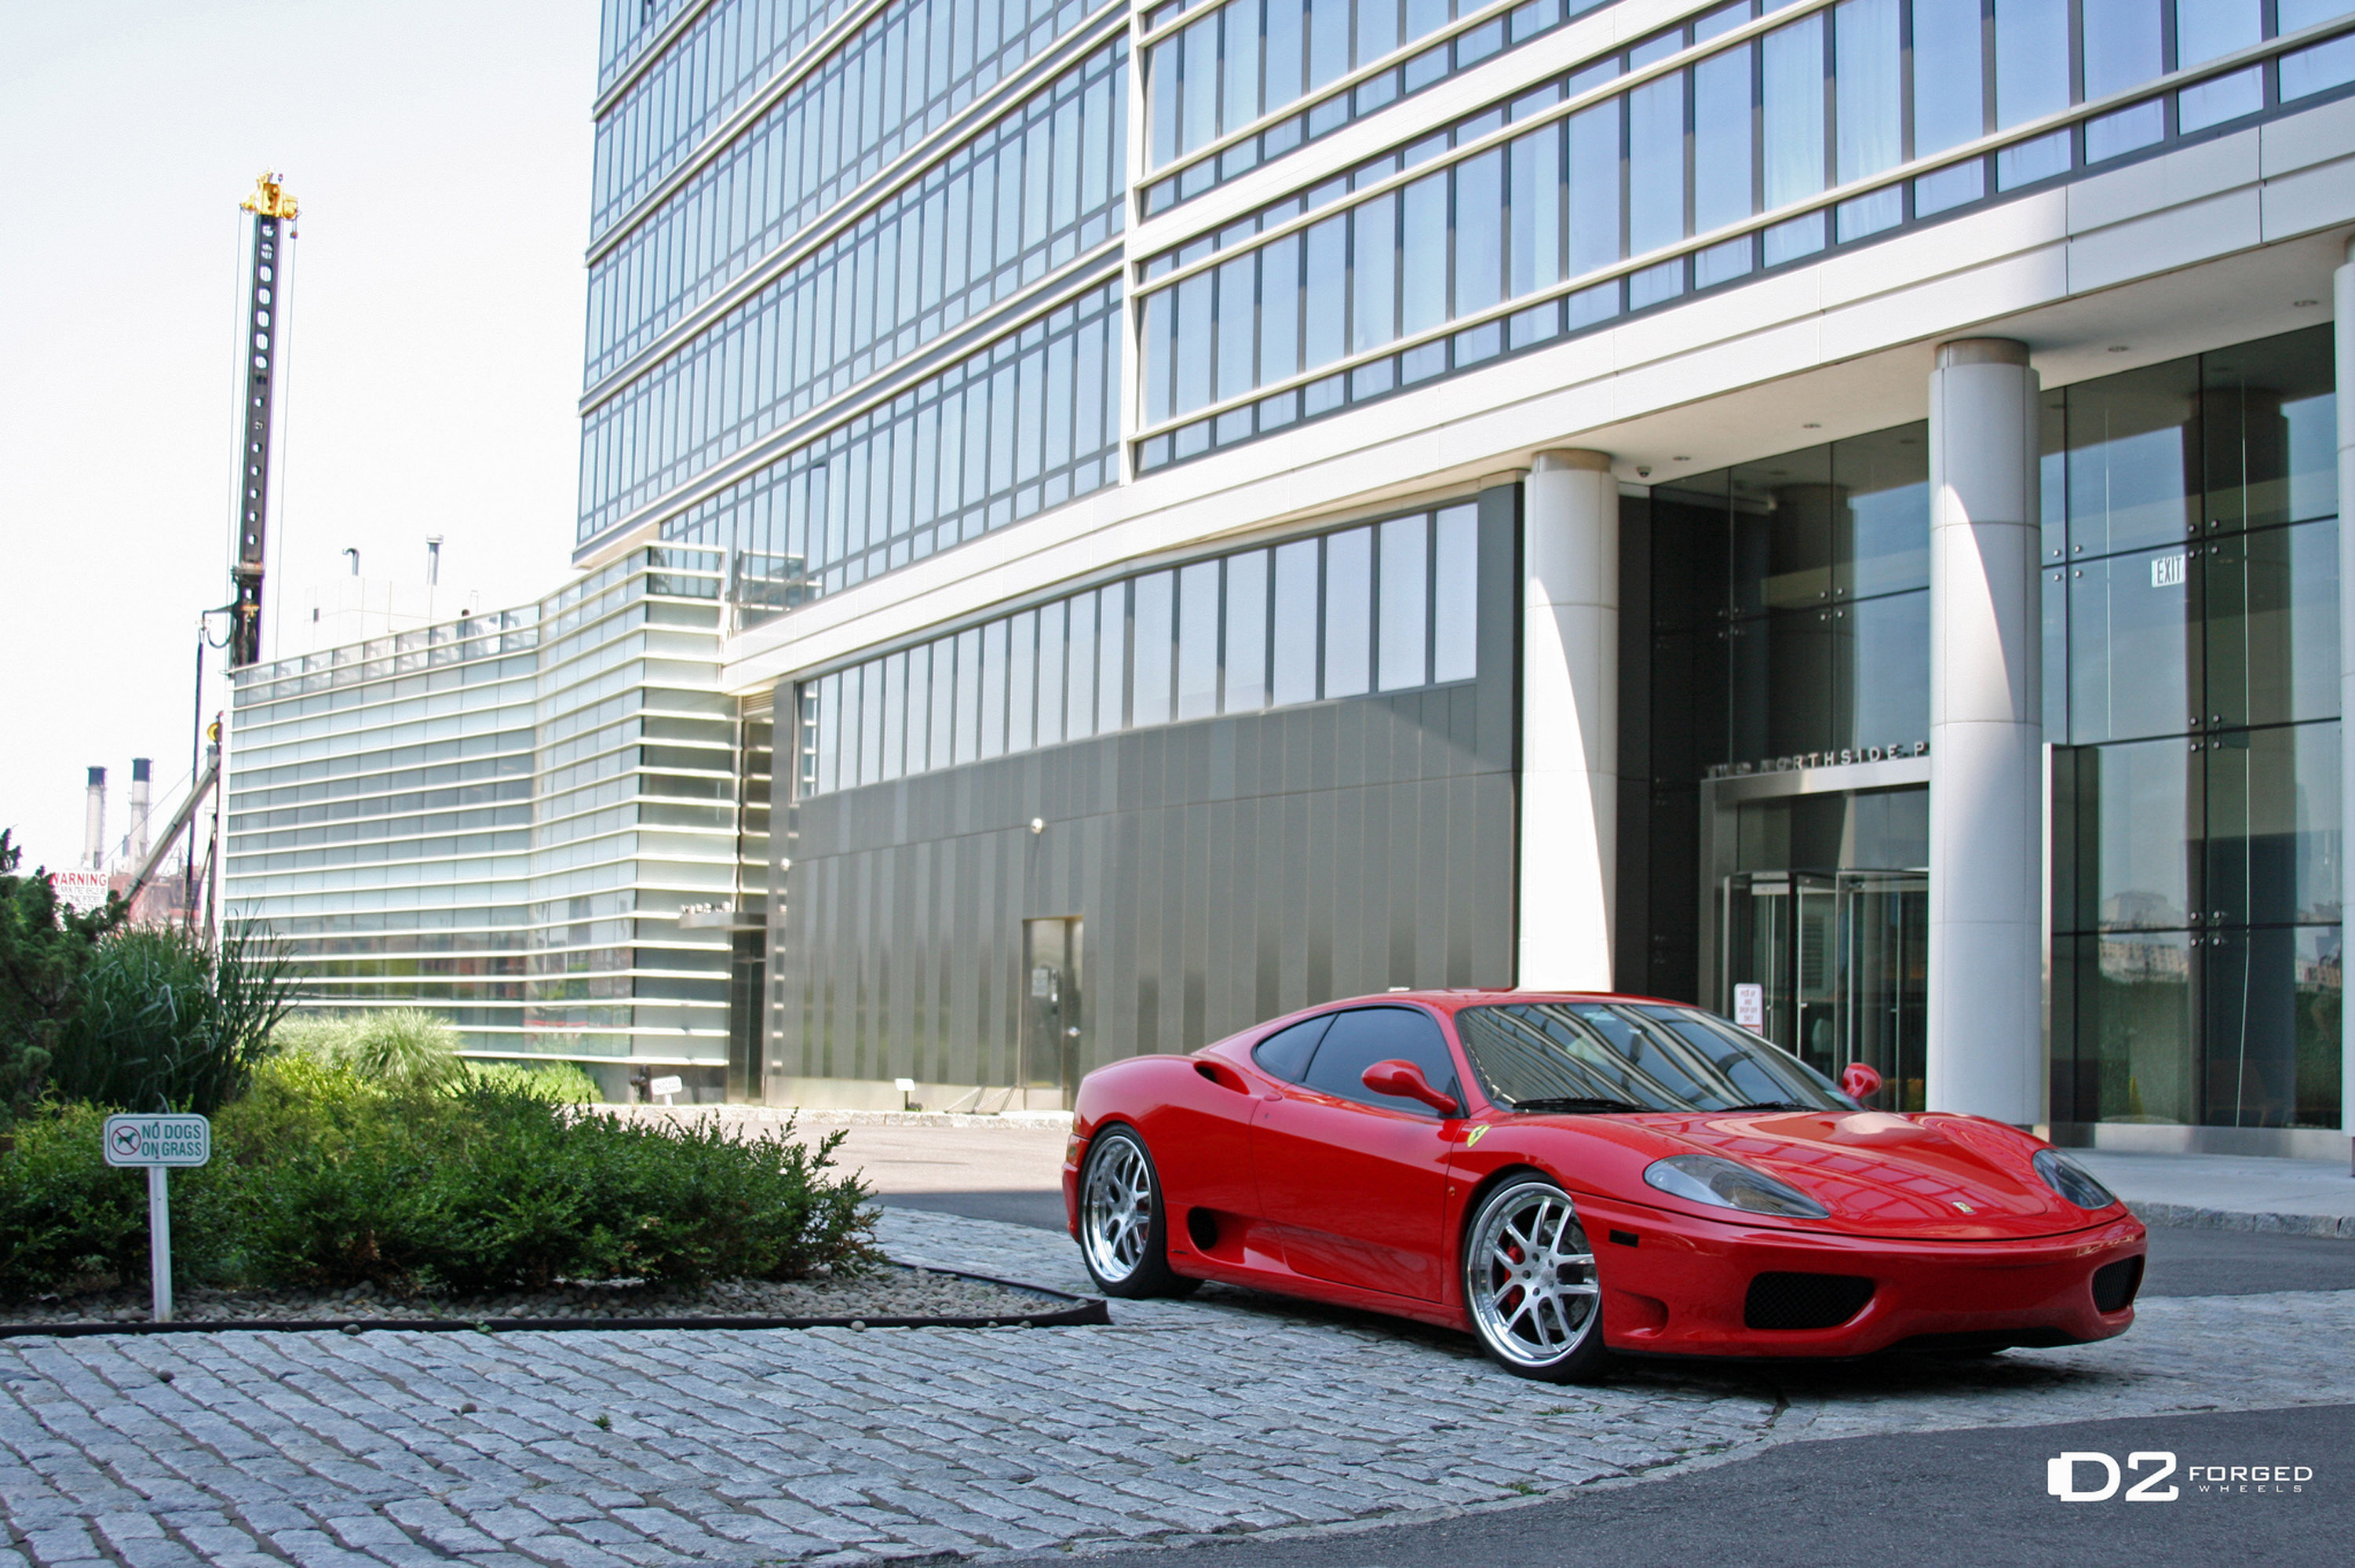 2012, D2forged, Ferrari, 360, Fms 08, Supercars, Supercar Wallpaper